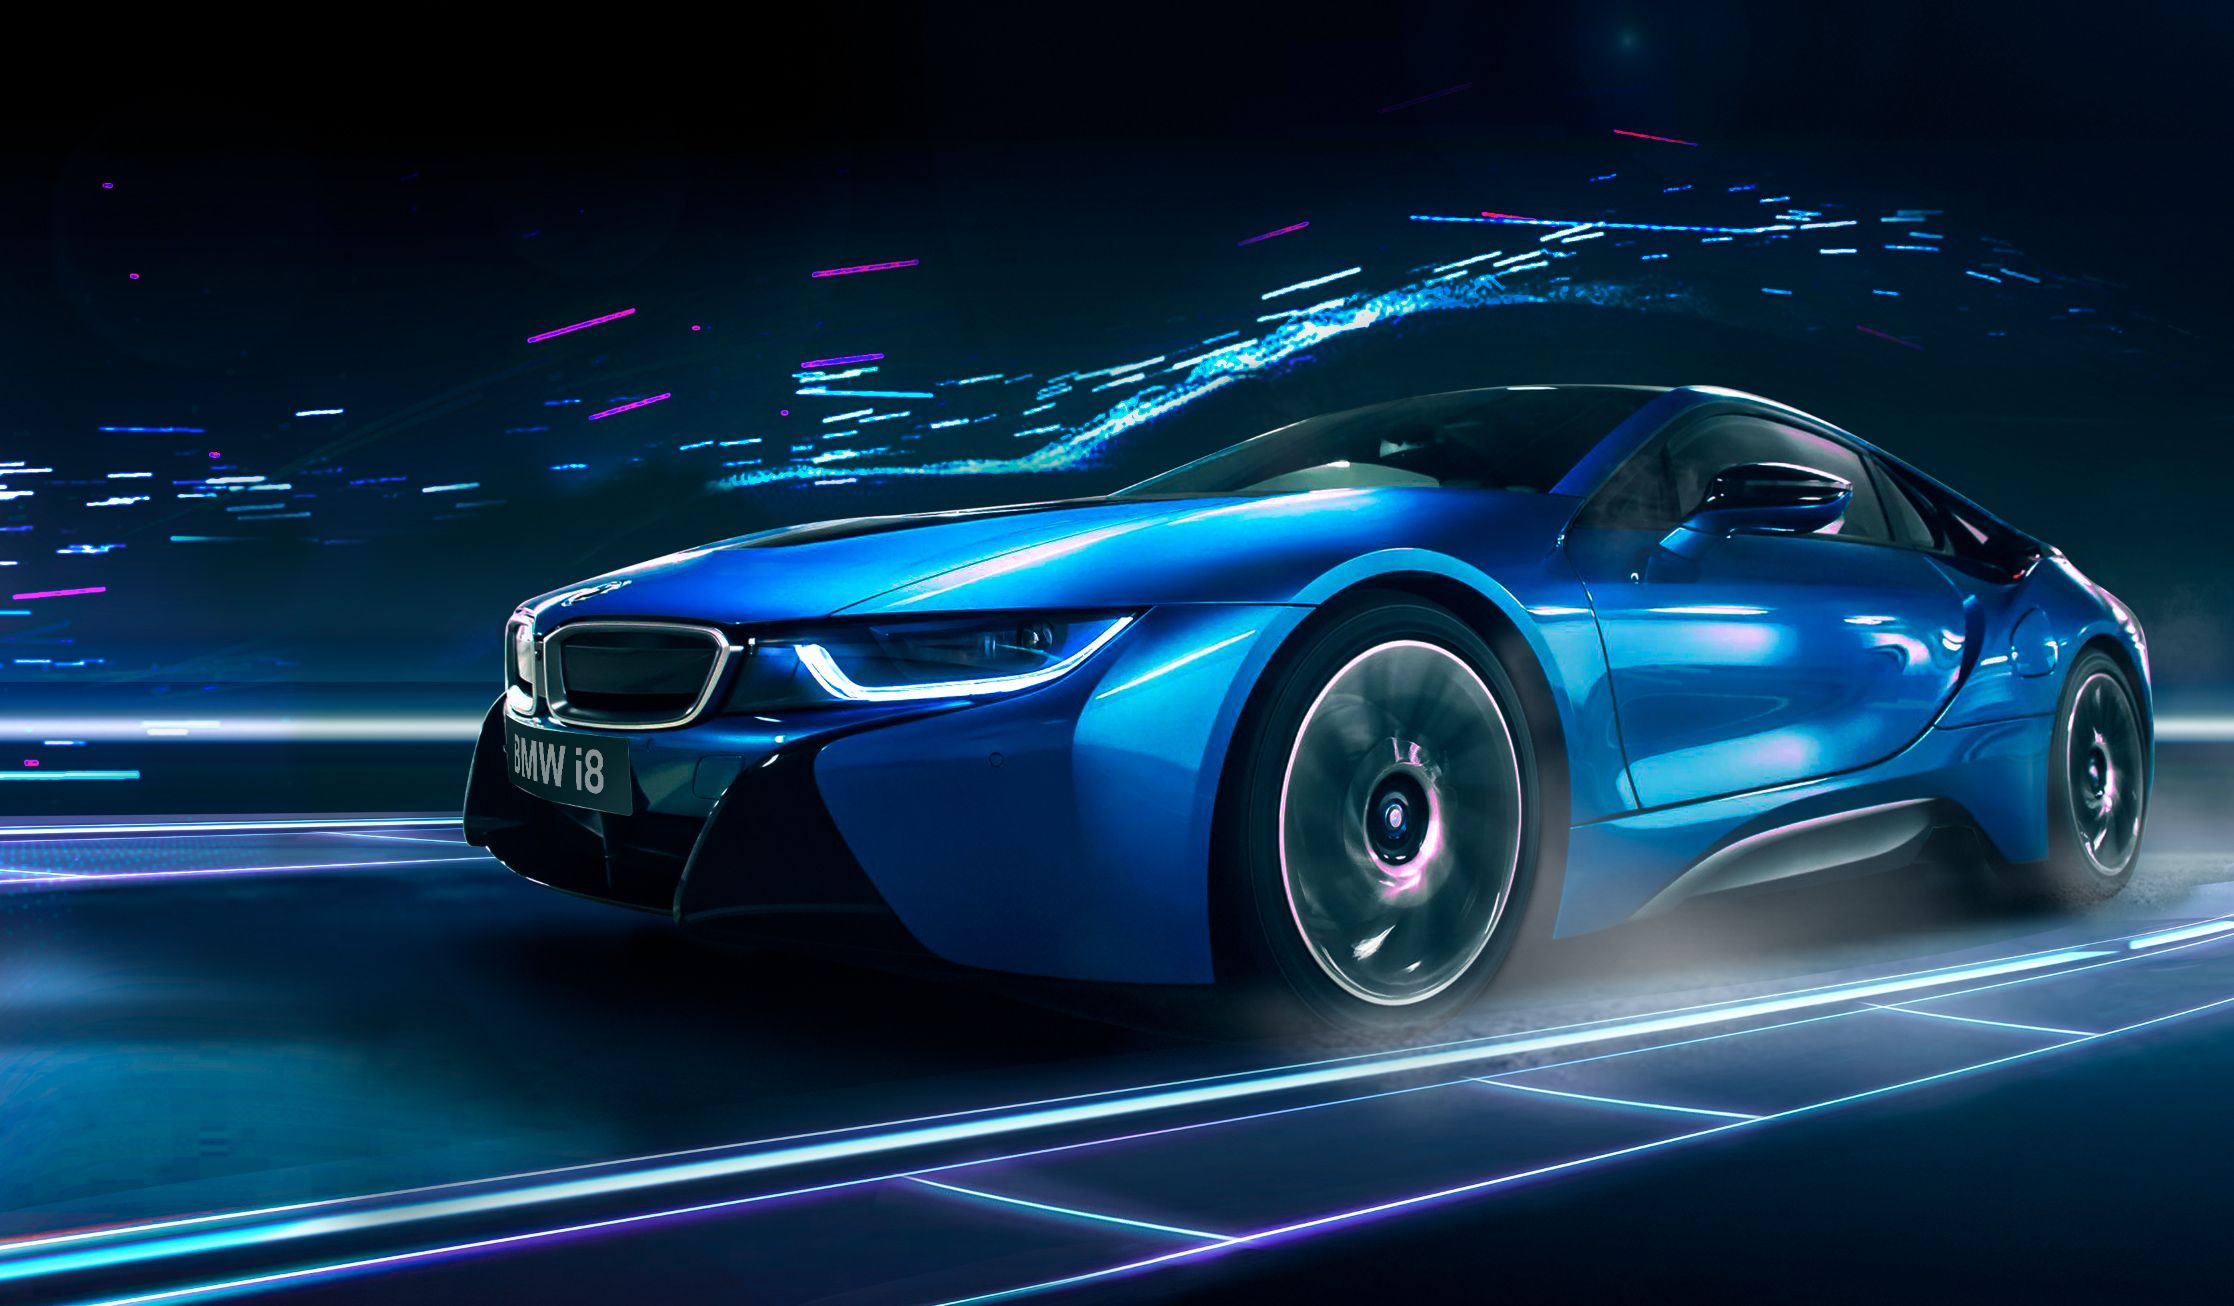  BMW I8 Hintergrundbild 2234x1306. BMW I8 Blue Wallpaper Free BMW I8 Blue Background